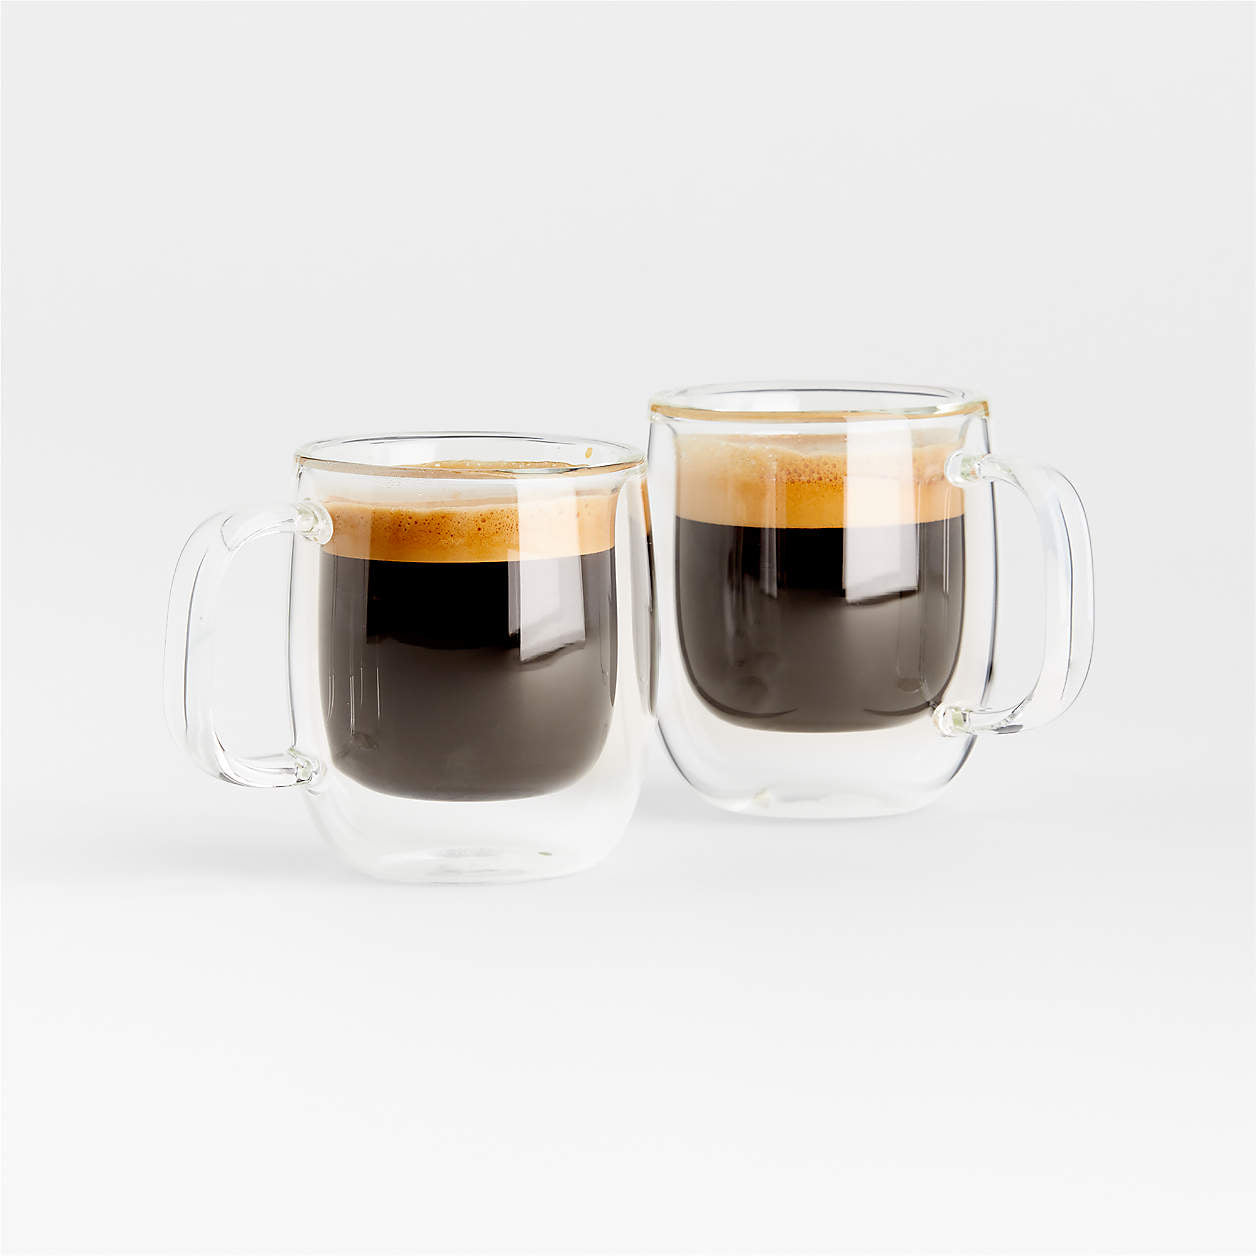 2 sorrento espresso mugs filled with espresso on a white background.